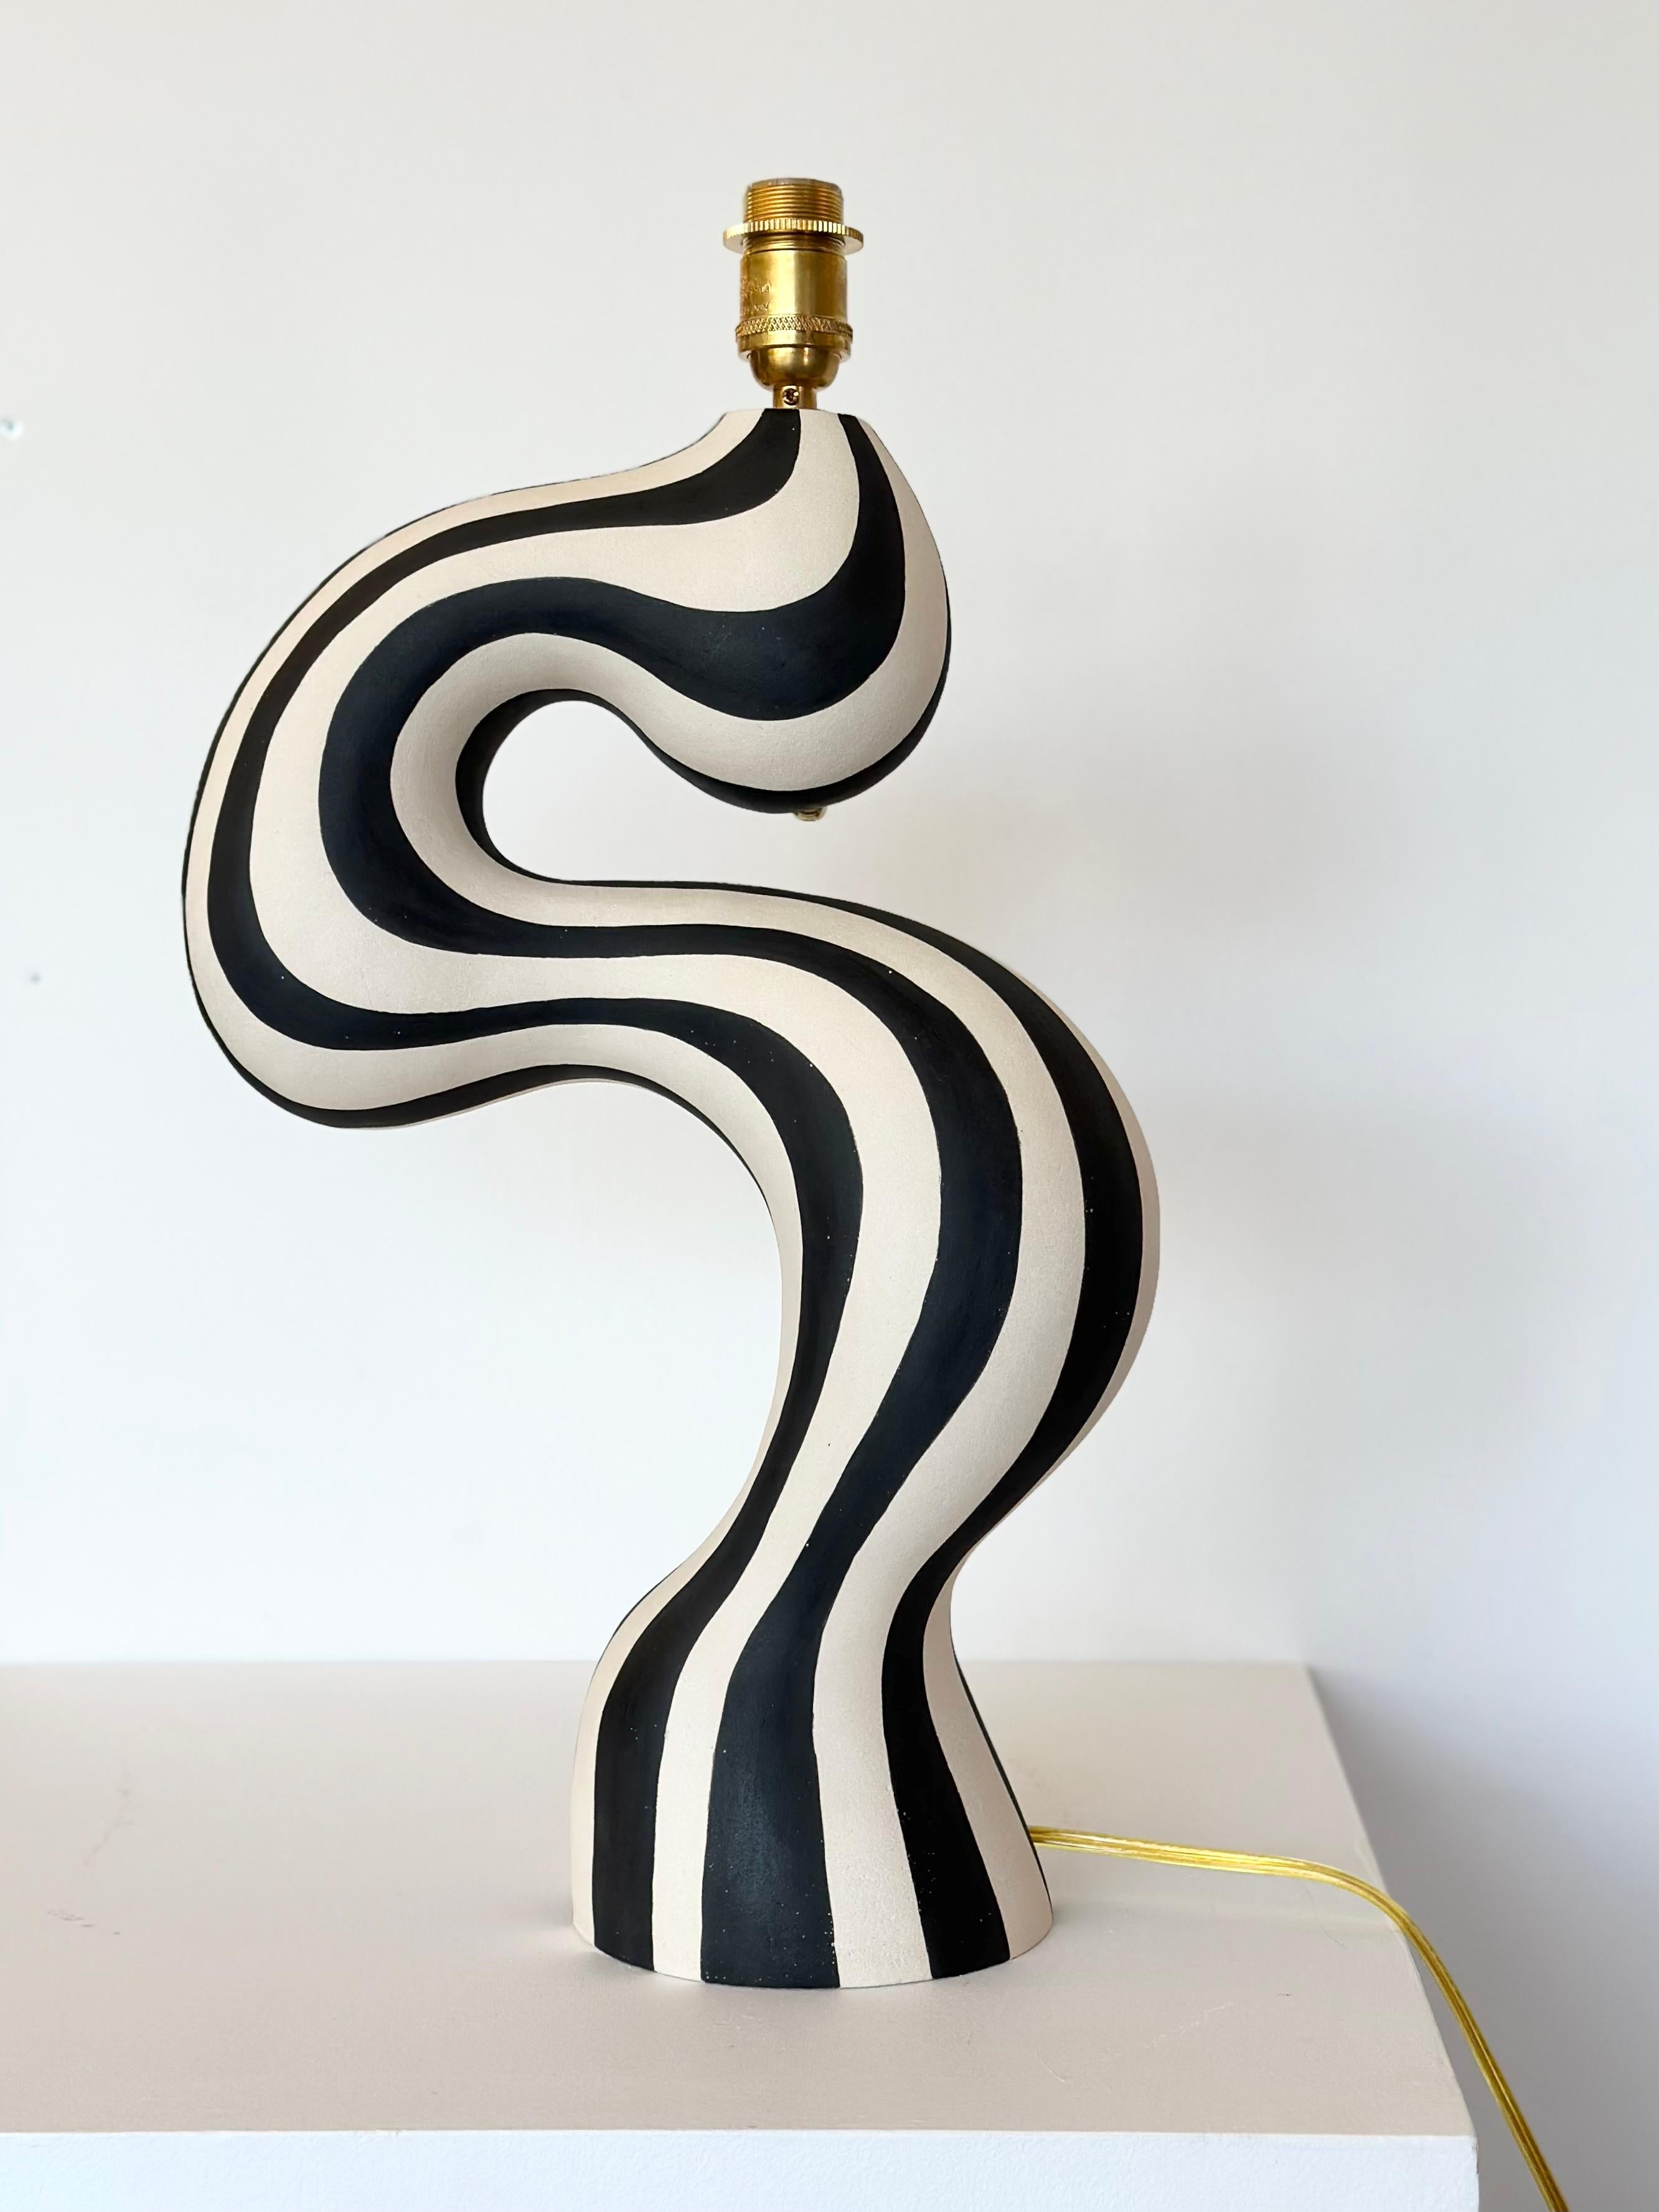 Hand-Crafted Handmade ceramic table lamp by Norwegian artist Jossolini